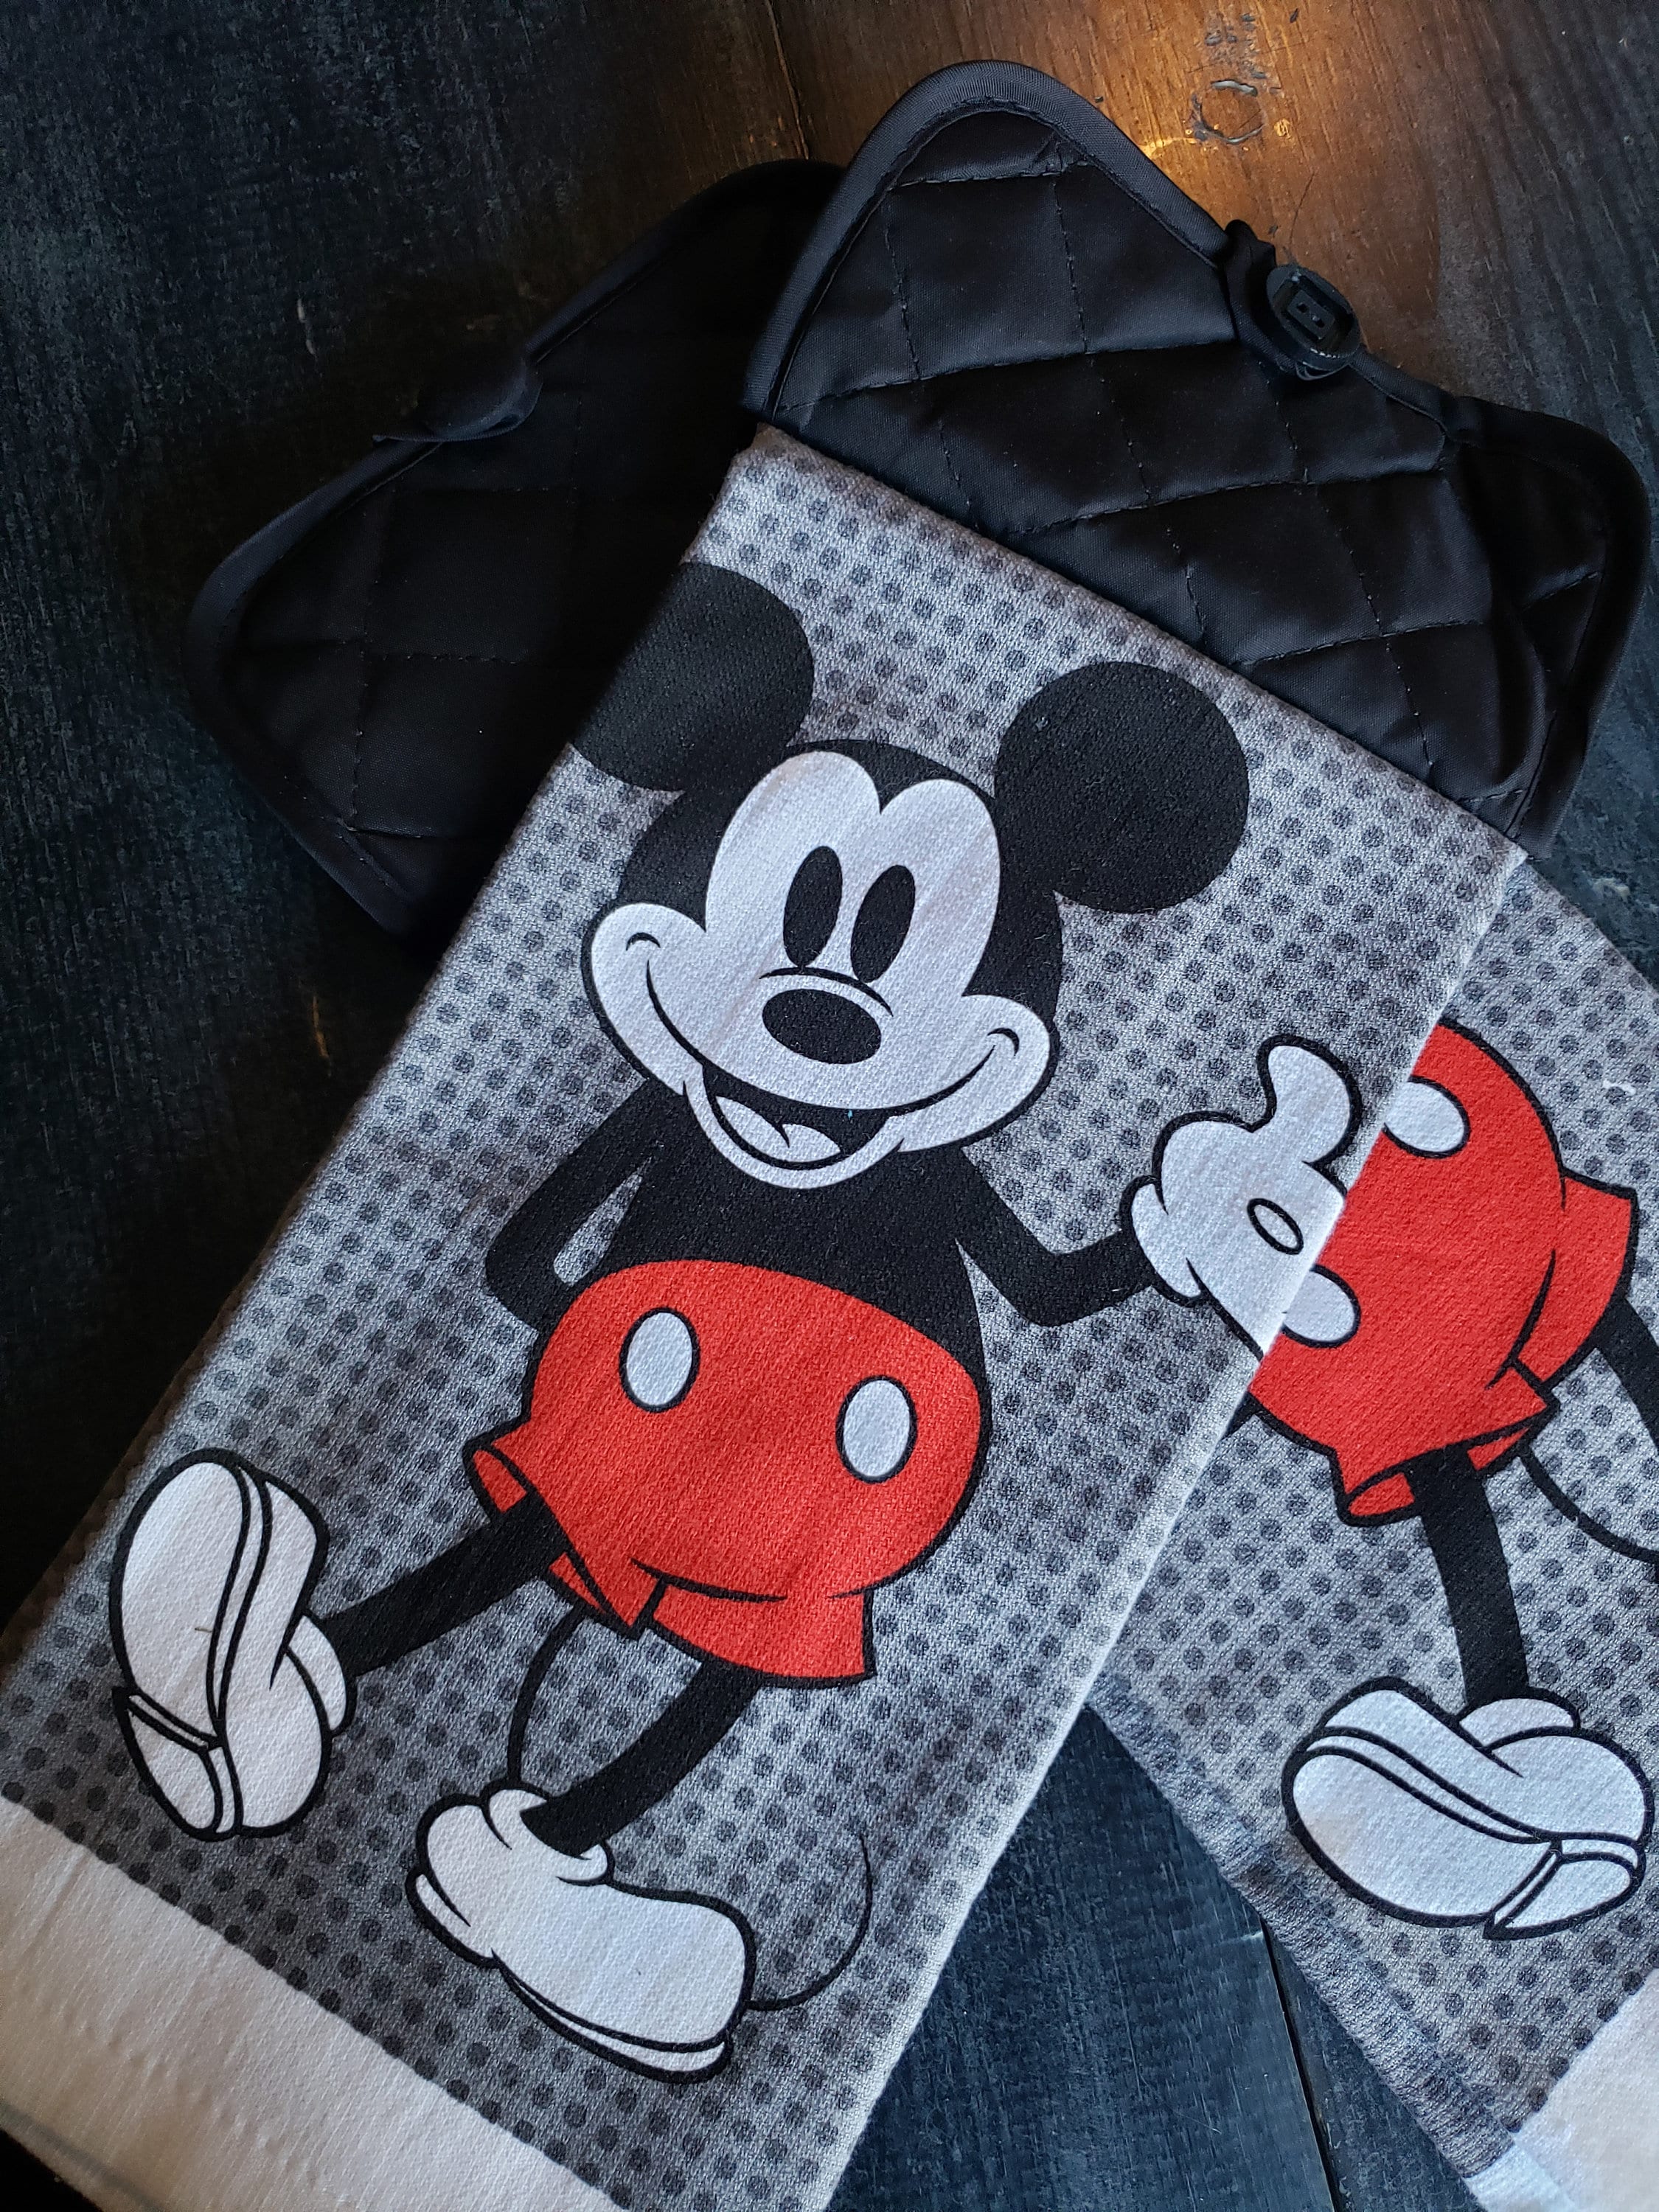 Disney Dish Towel – Cotton